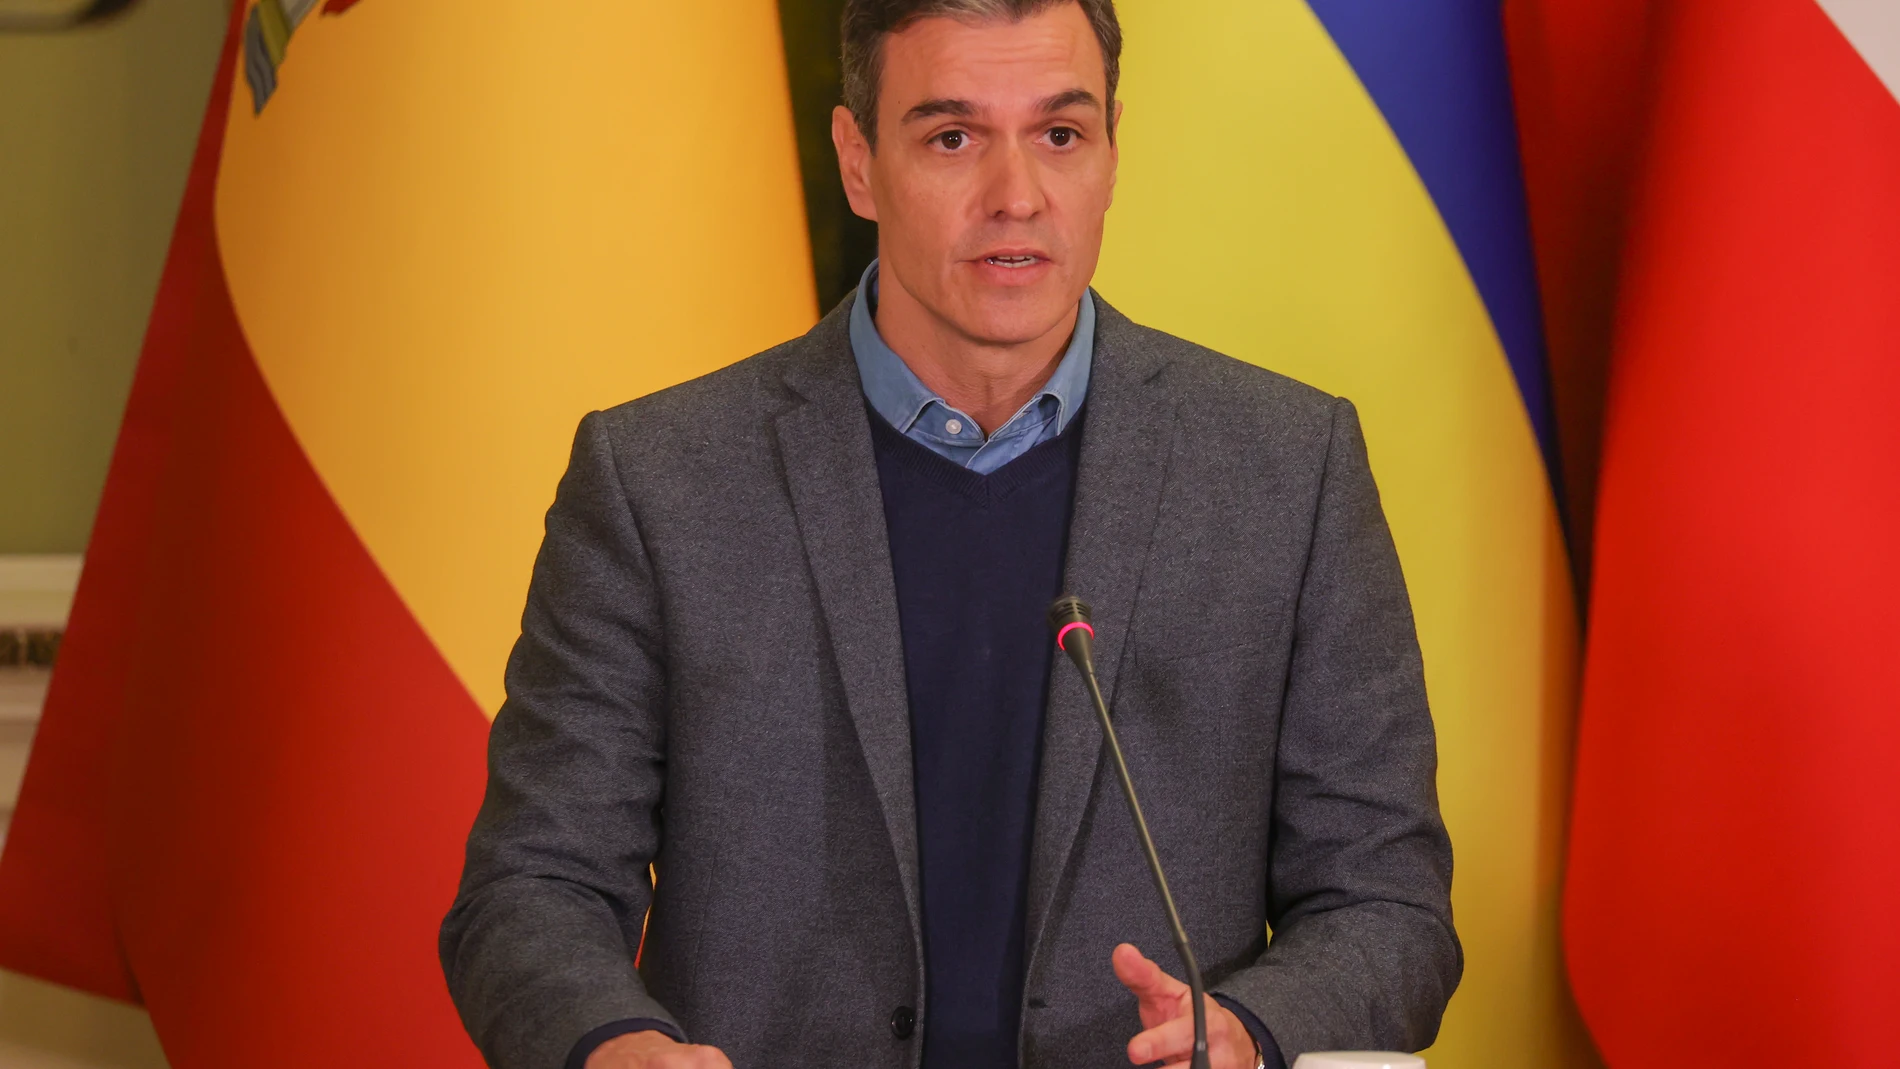  Pedro Sánchez en la rueda de prensa en Kiev tras reunirse con Zelenski